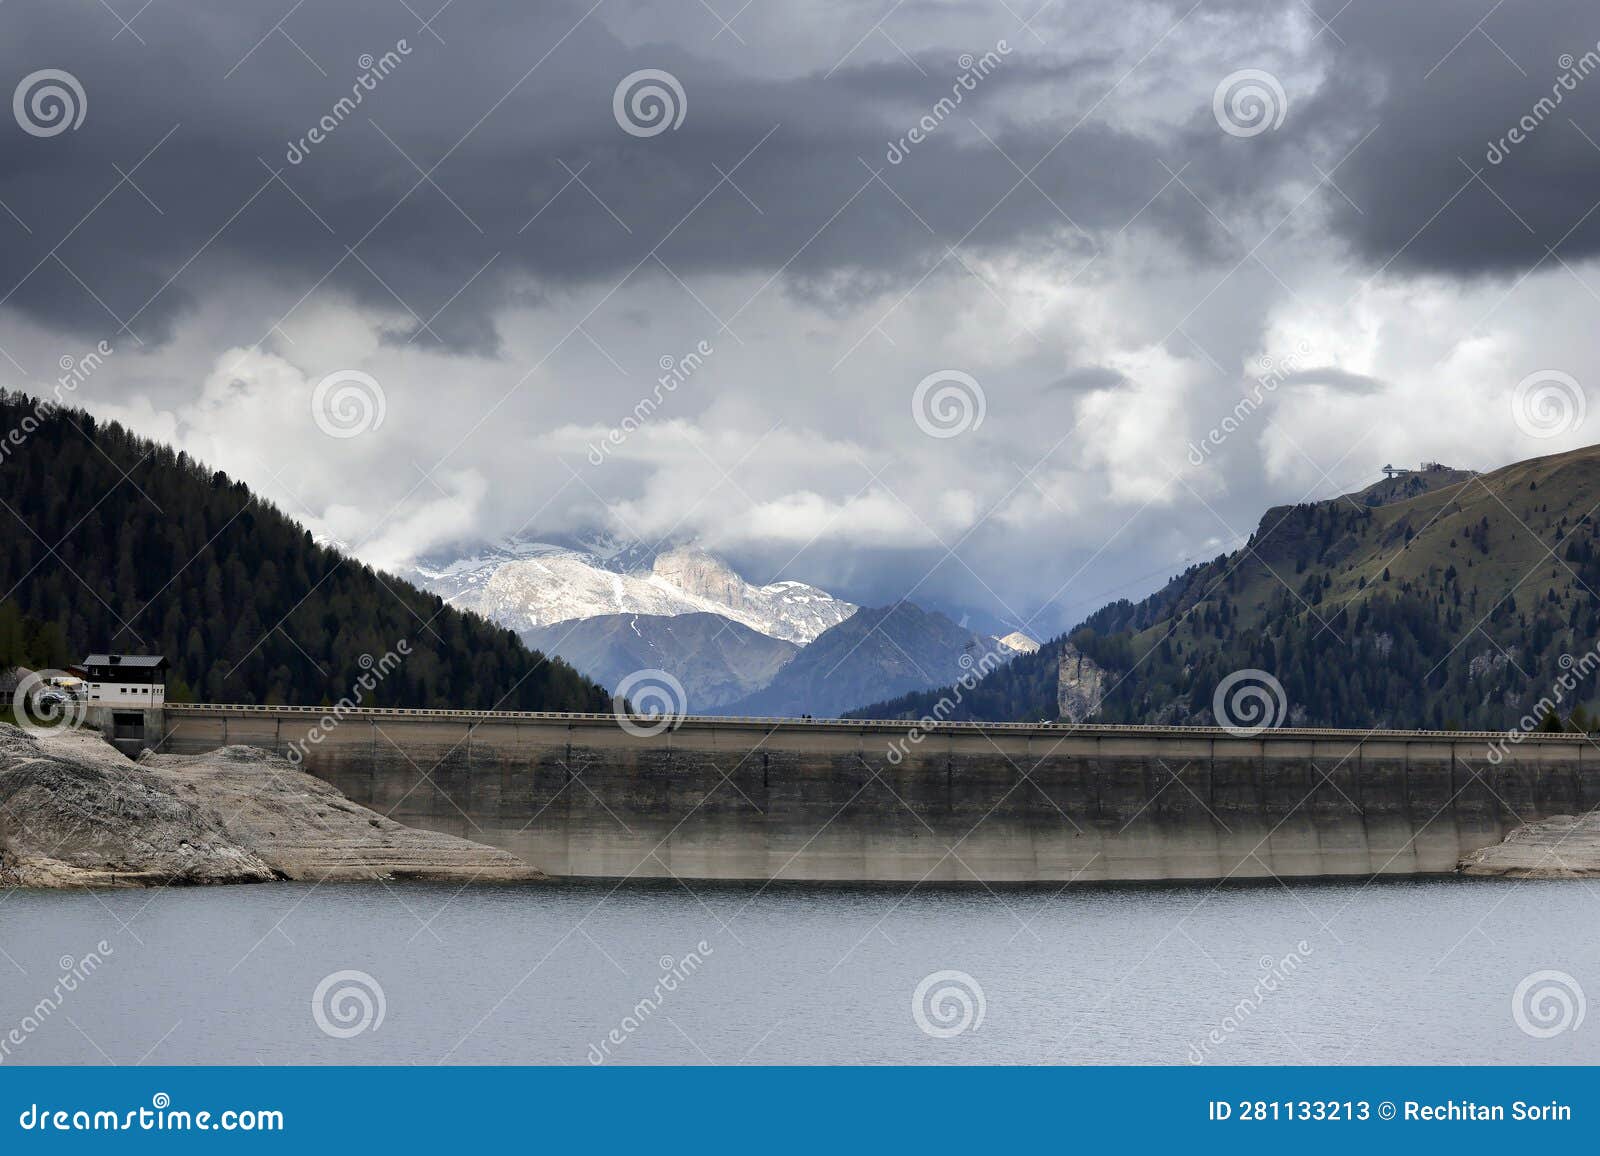 the dam of lago di fedaia, at the foot of the marmolada mountain. trento, itlay.